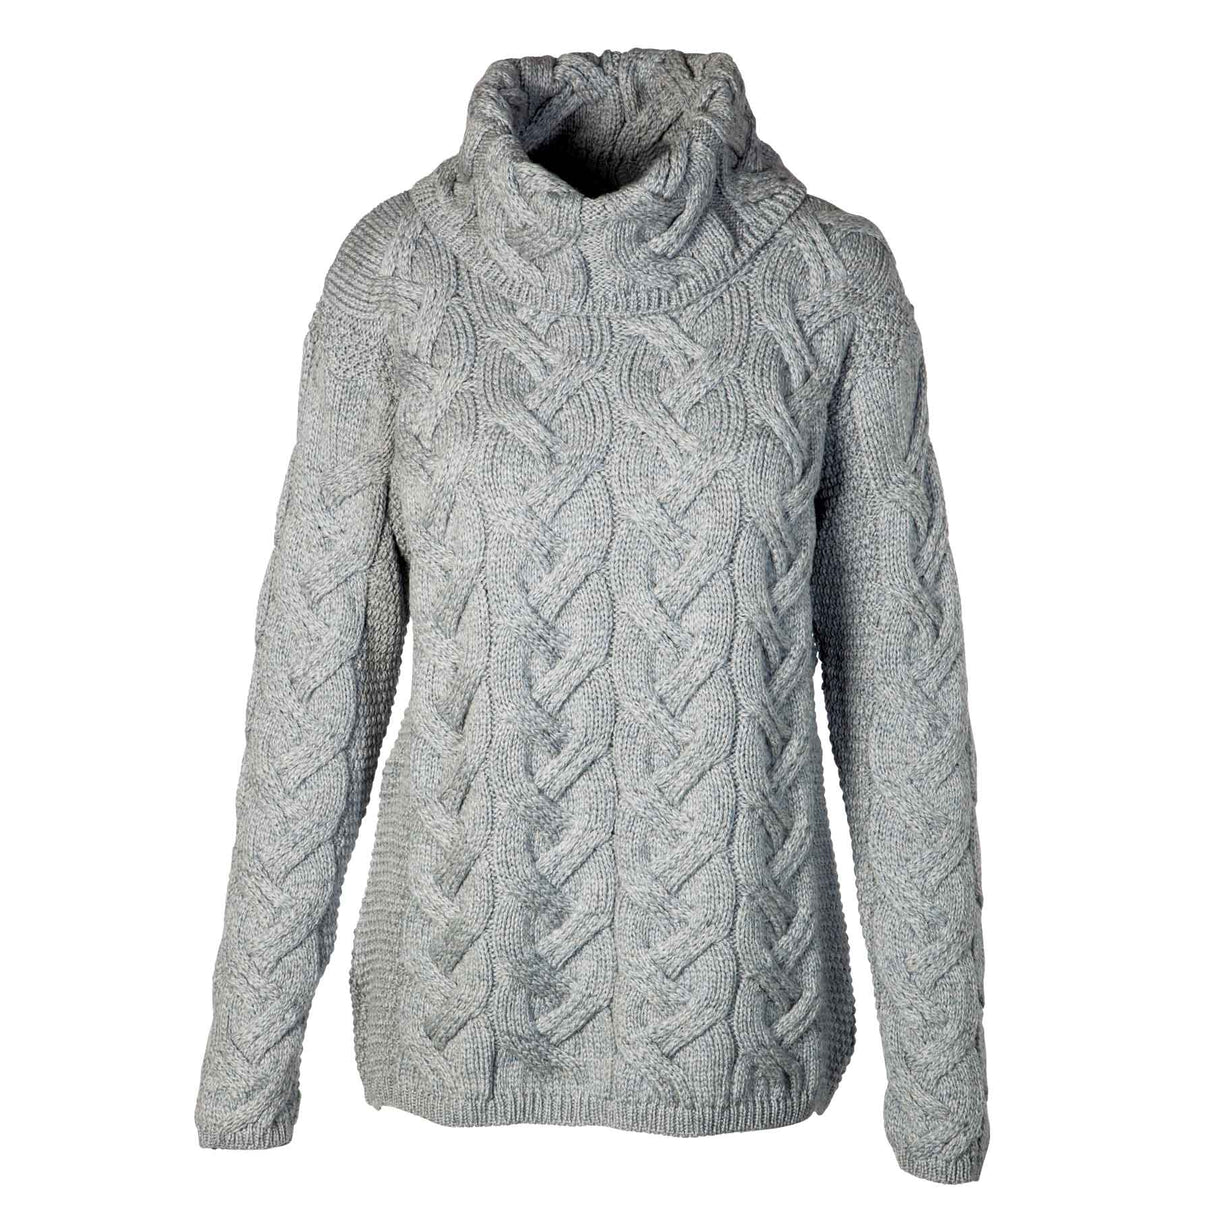 Supersoft Turtleneck Aran Knit Sweater, Denim Blue - Creative Irish Gifts